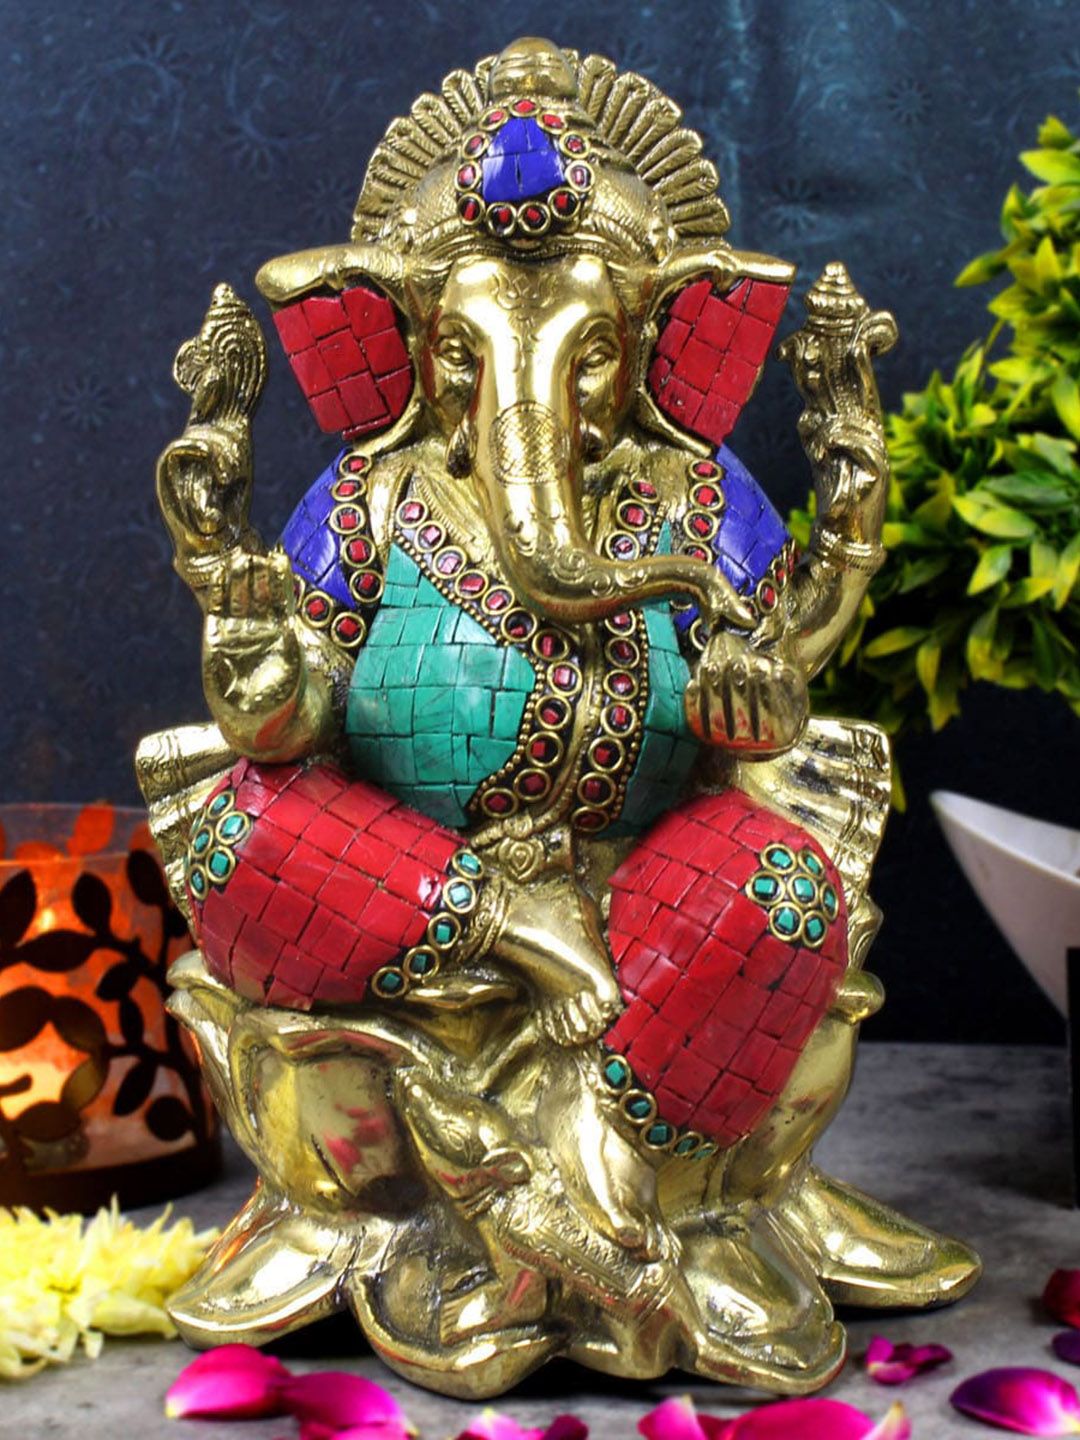 StatueStudio Gold-Toned & Red Textured Ganpati Showpiece Price in India